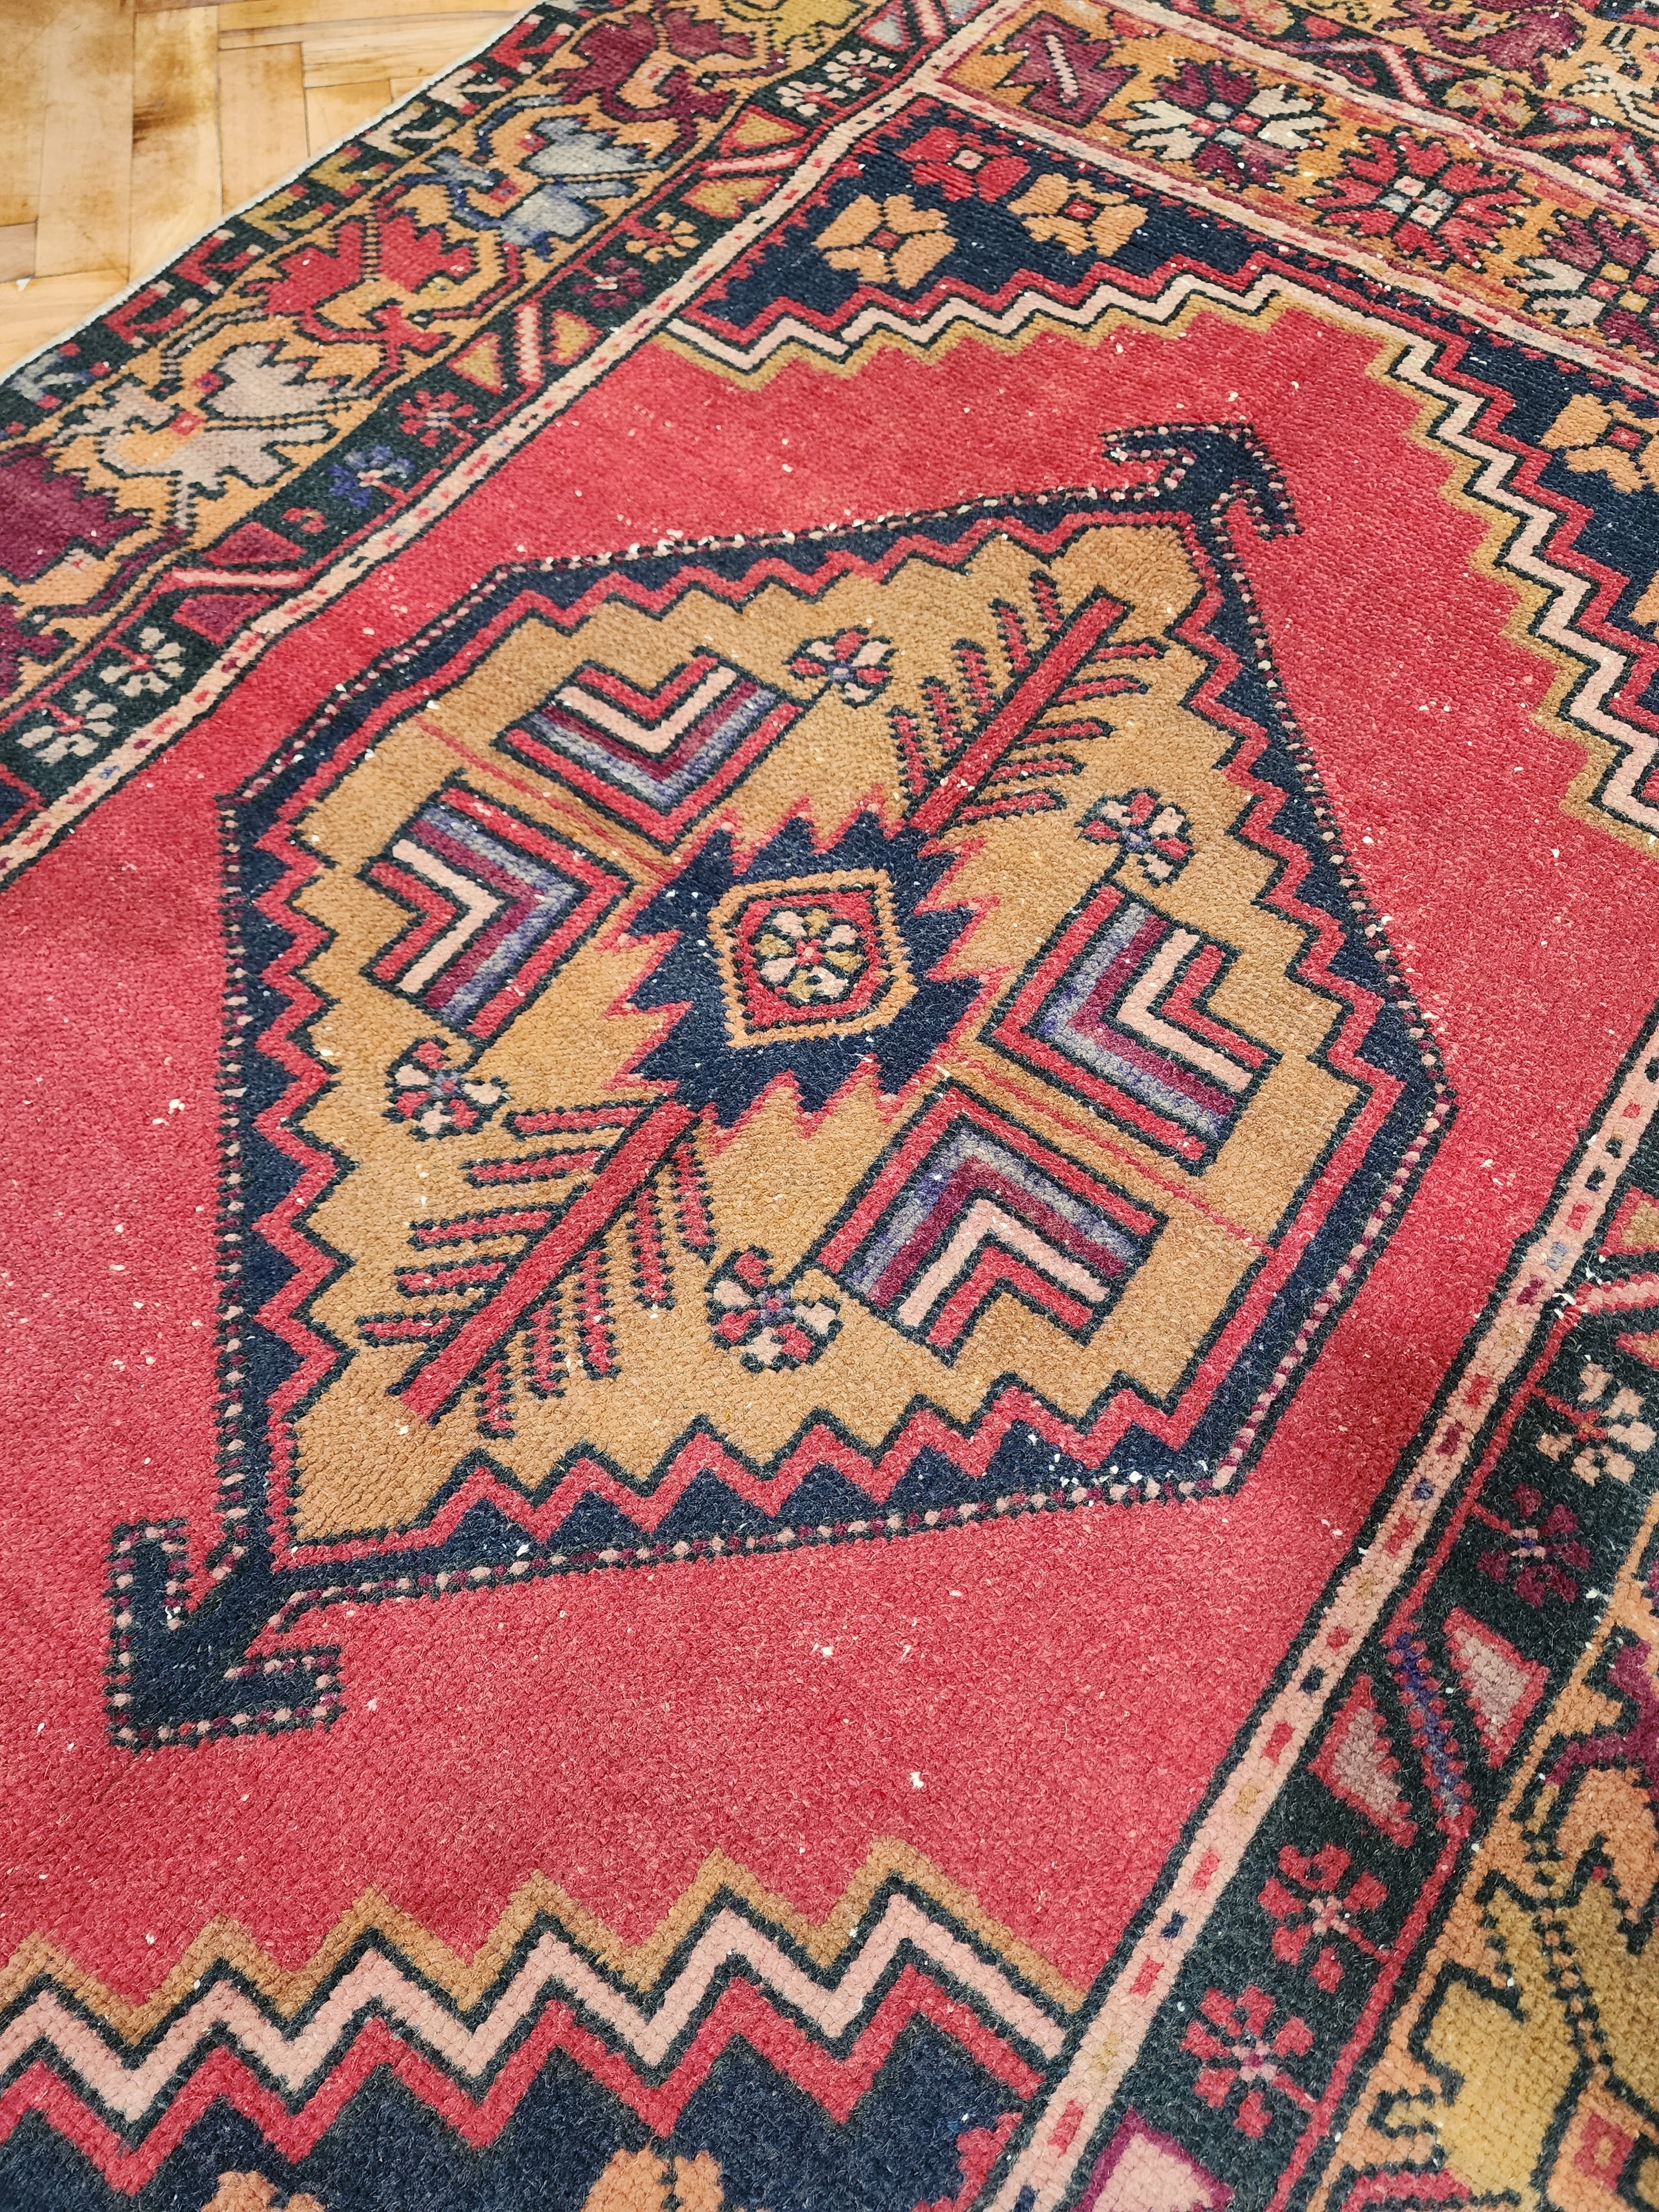 Vintage Anatolian Turkish Rug, Tribal Nomadic Handmade Rug, Boho Rustic Decor Faded Distressed Rug, Natural Wool Persian Area Rug 5'8"x3'6"